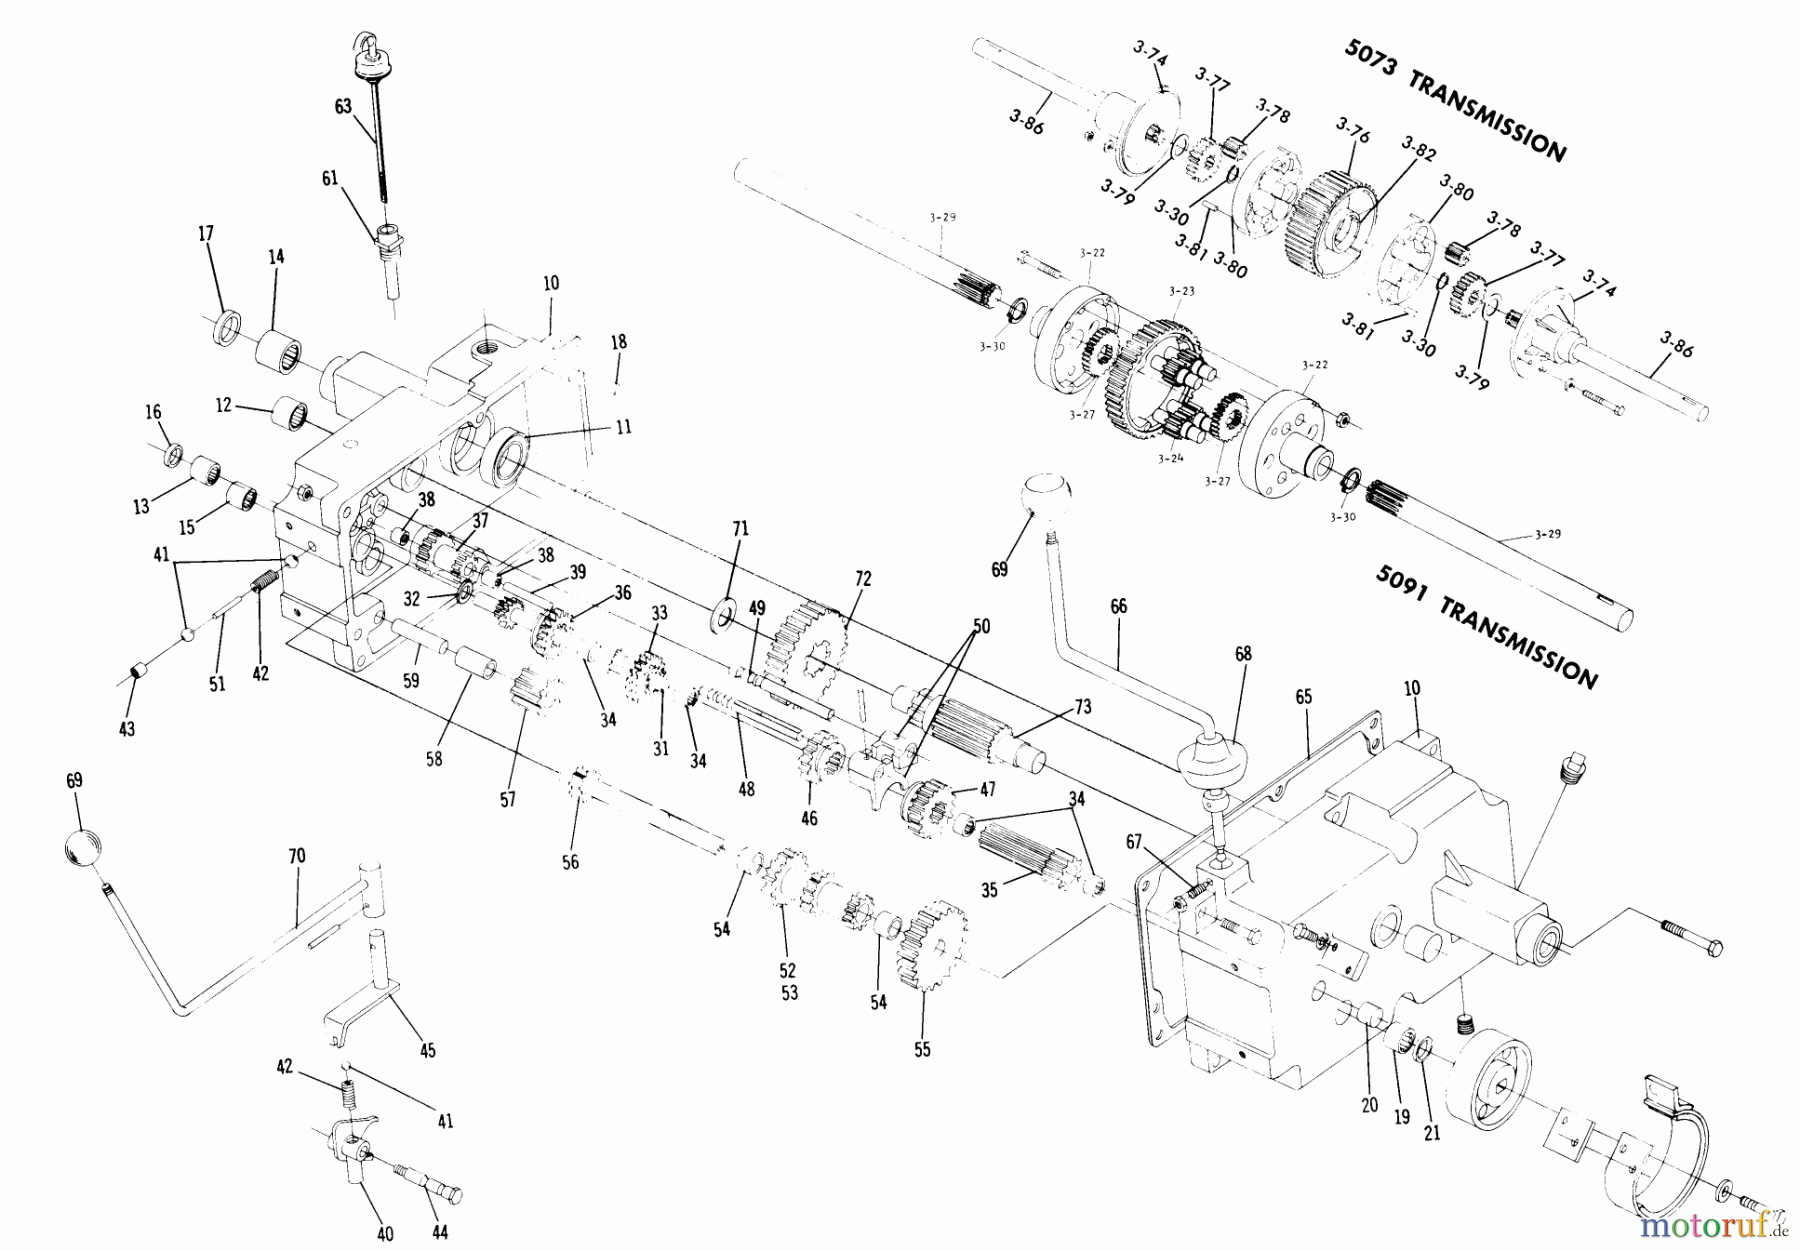  Toro Neu Mowers, Lawn & Garden Tractor Seite 1 1-0380 (C-160) - Toro C-160 8-Speed Tractor, 1974 TRANSMISSION 8-SPEED